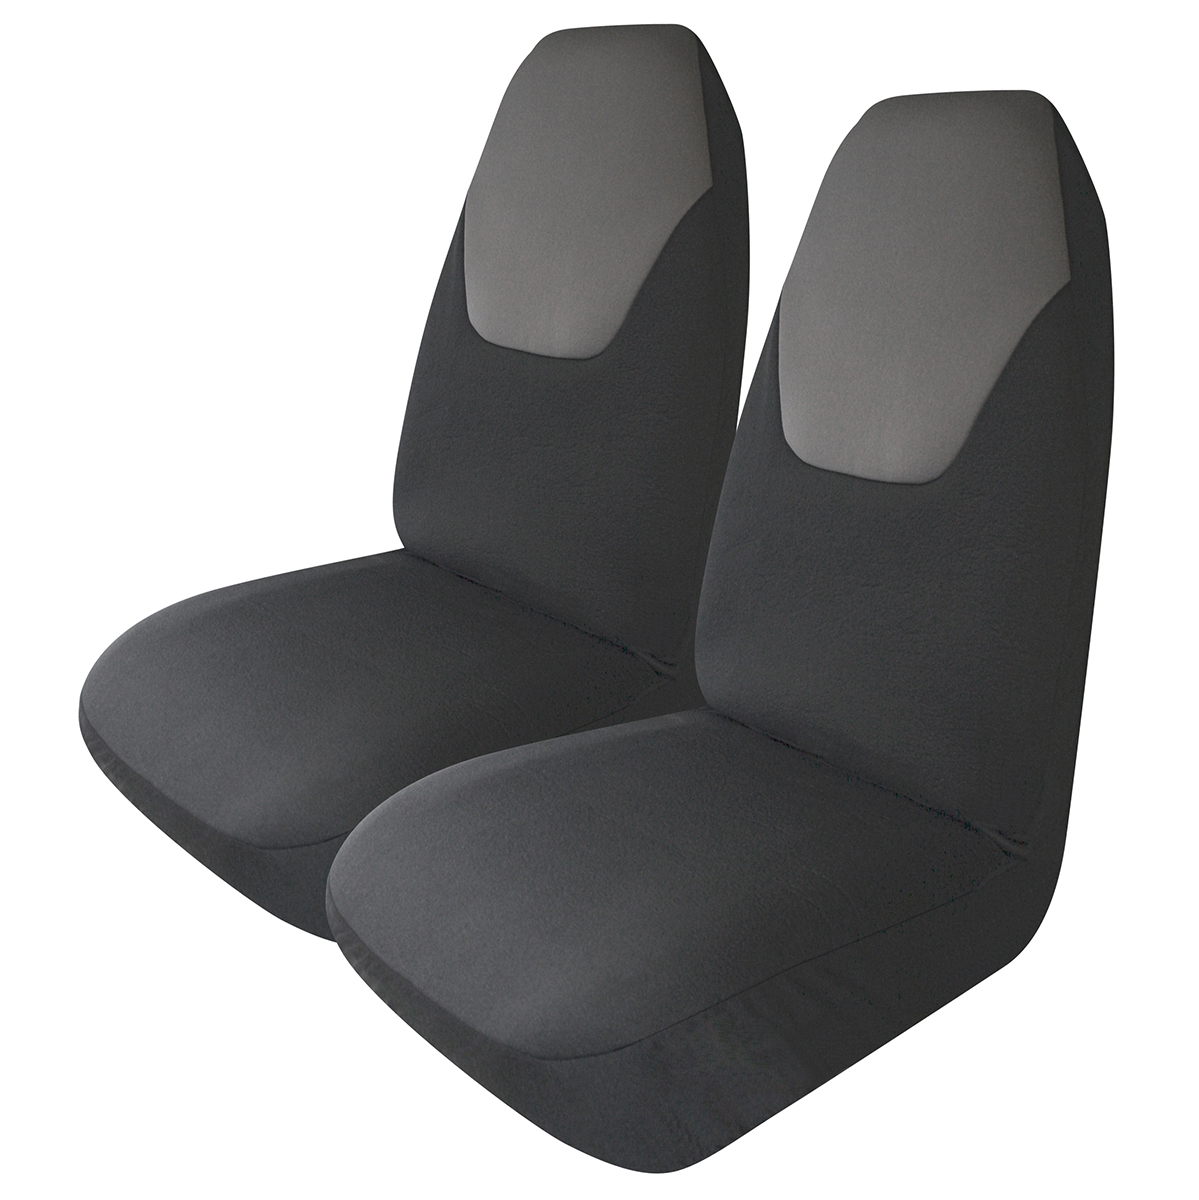 Eelgant Primnit Black/Grey High Back Seat Cover 2 pk